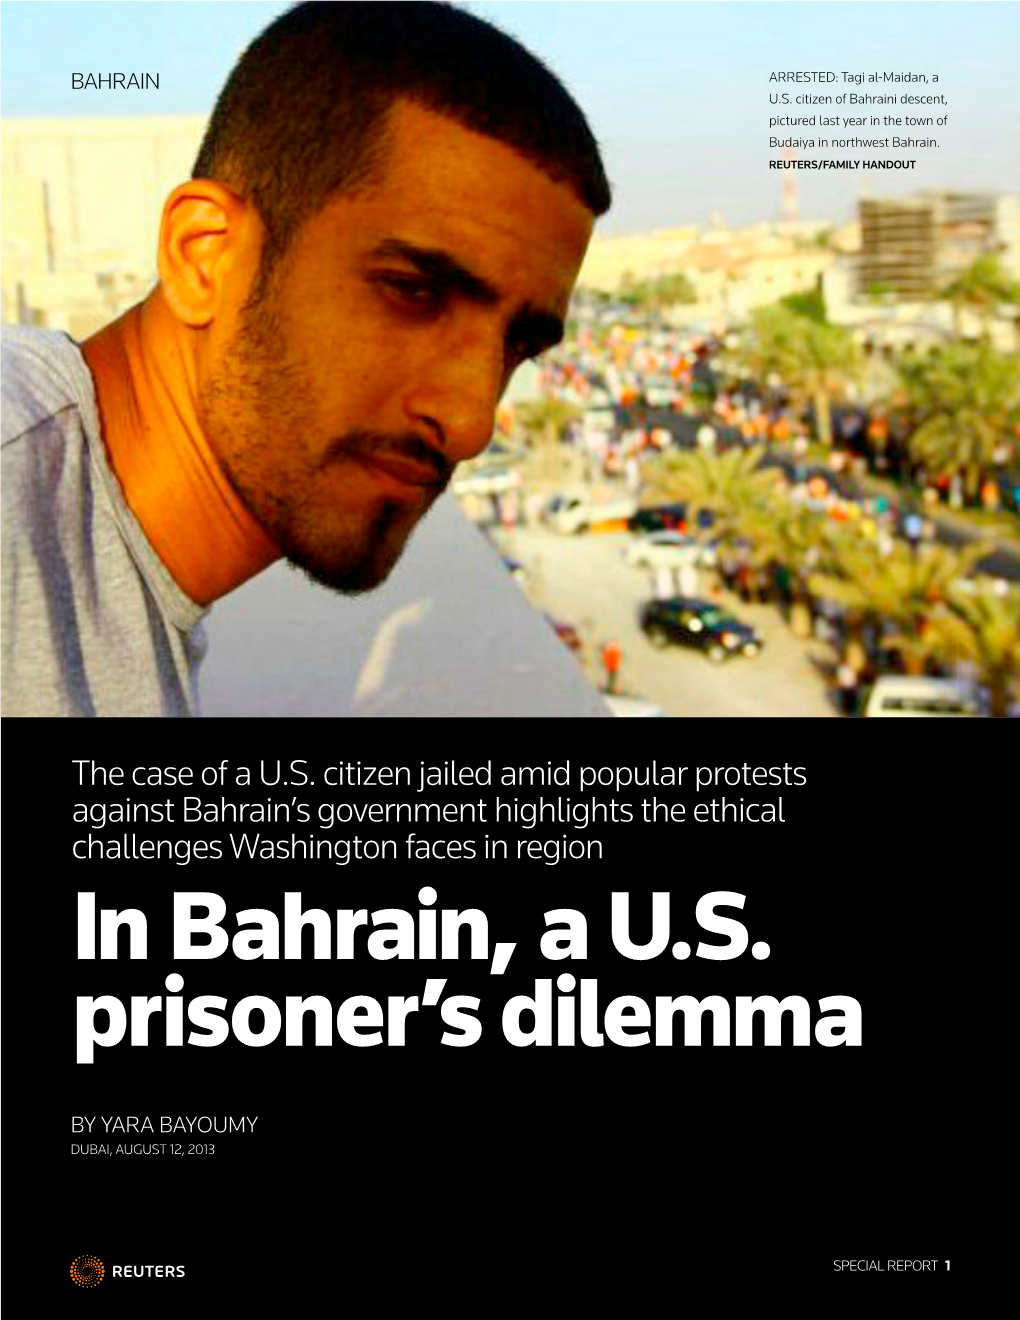 In Bahrain, a U.S. Prisoner's Dilemma